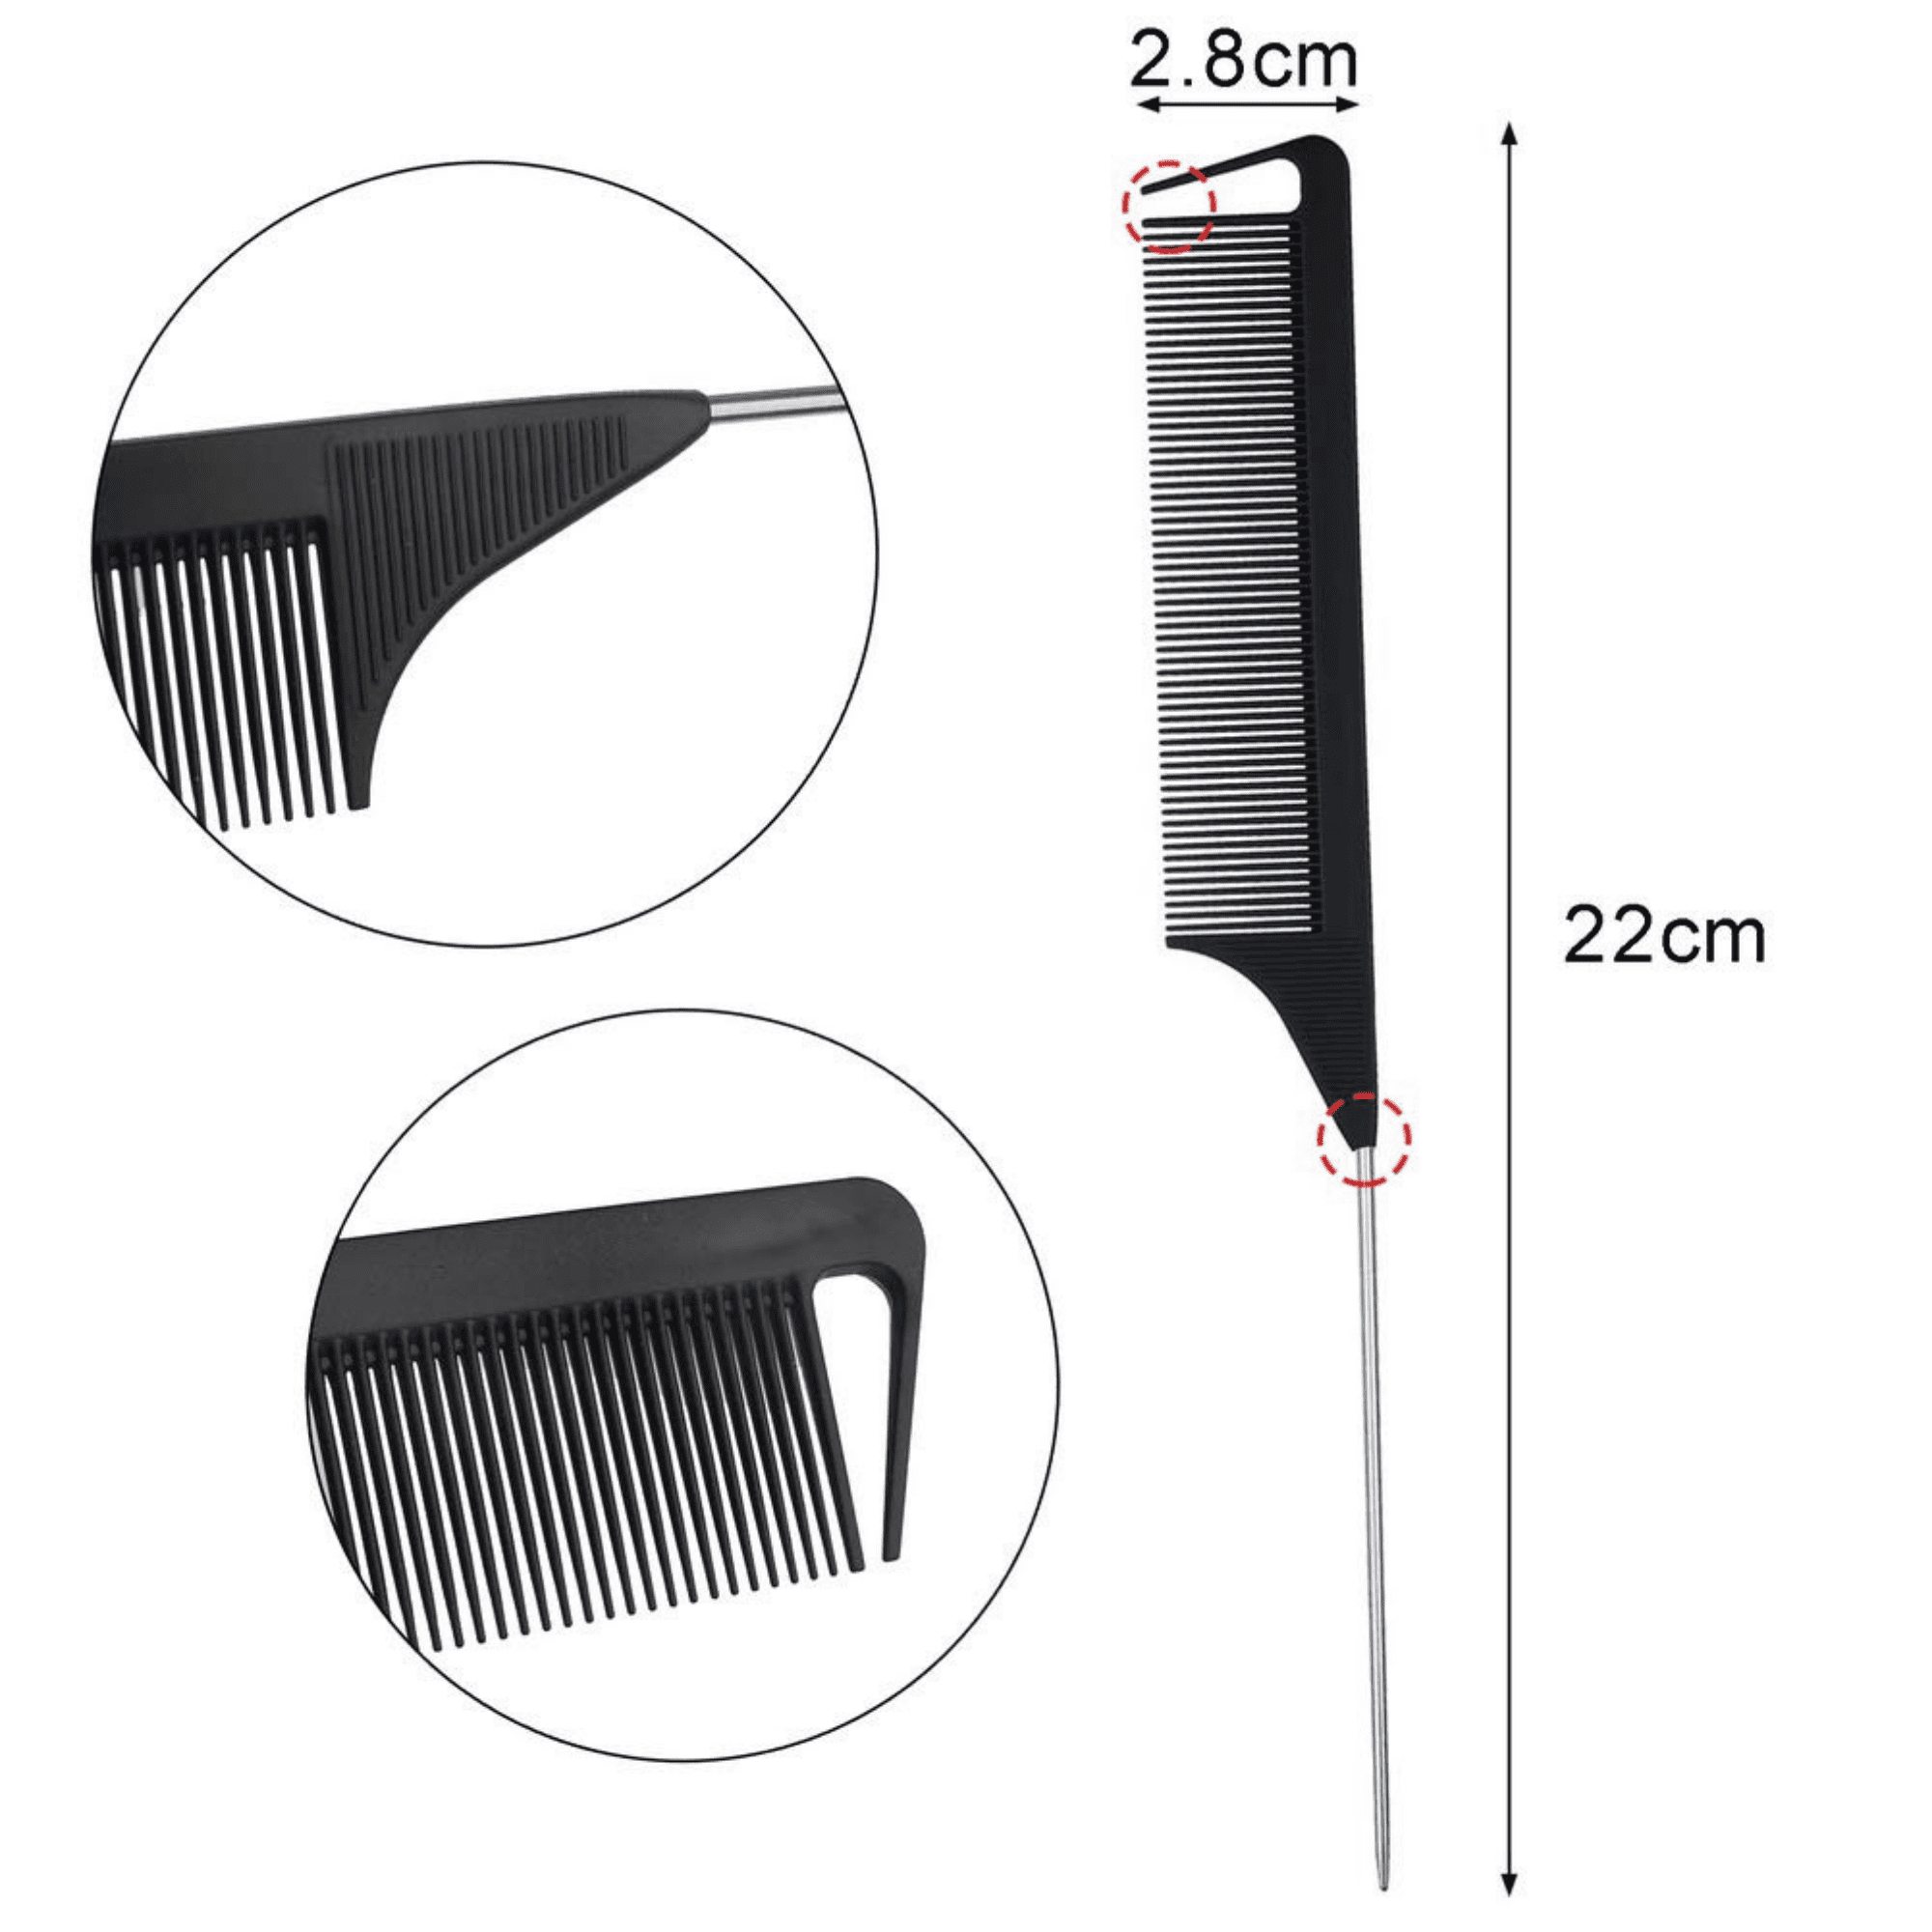 BTL - Braiding Metal Pin Tail Comb